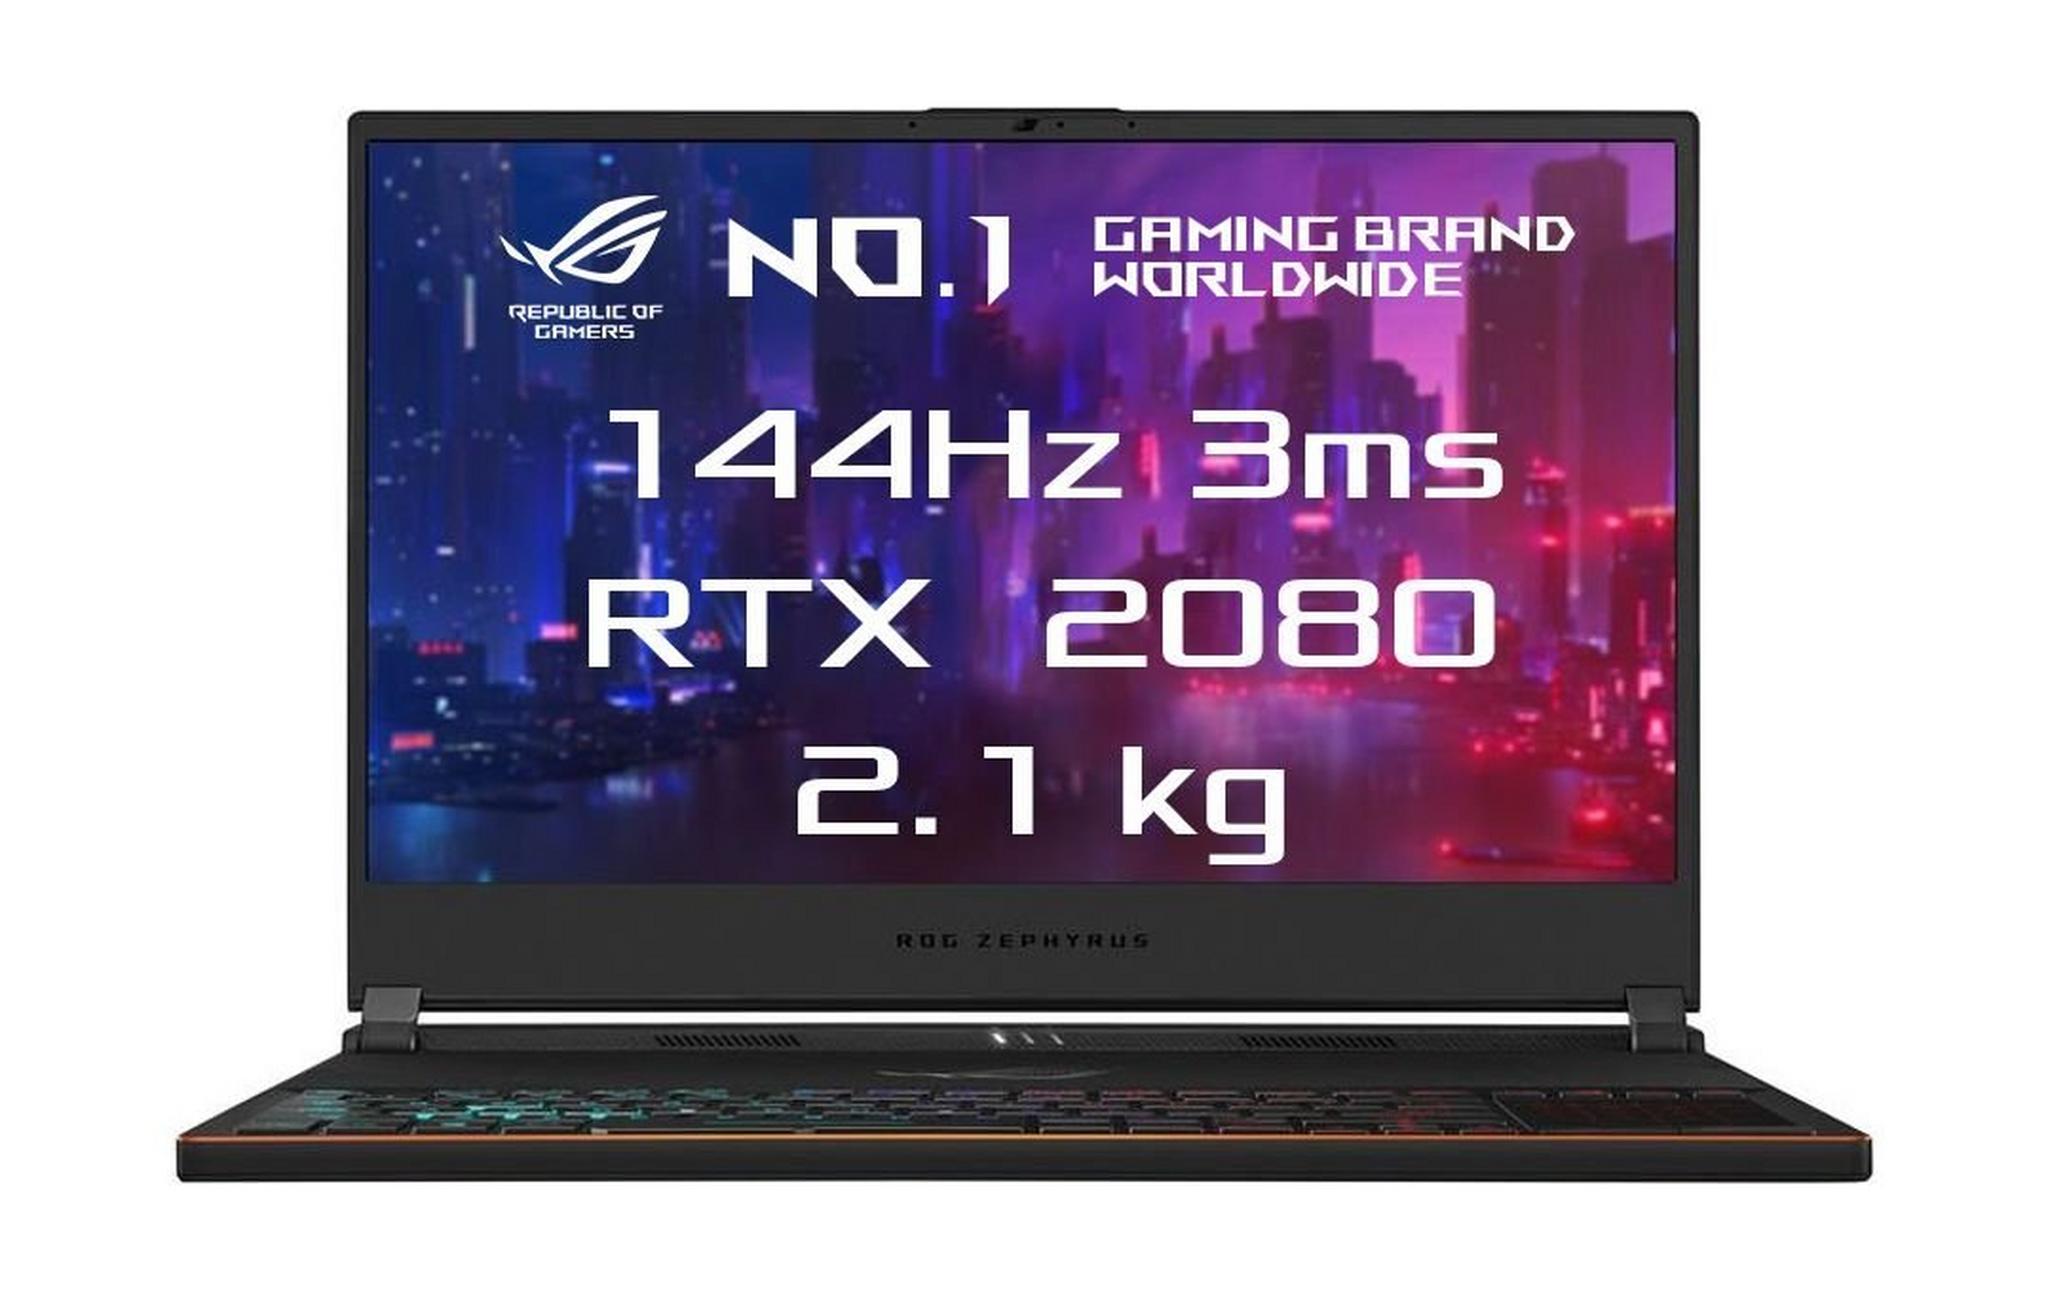 Asus ROG Zephyrus M GeForce RTX 2080Q 8GB Core i7 24GB RAM 512 SSD 15.6 inch Gaming Laptop (GX531GX) - Black